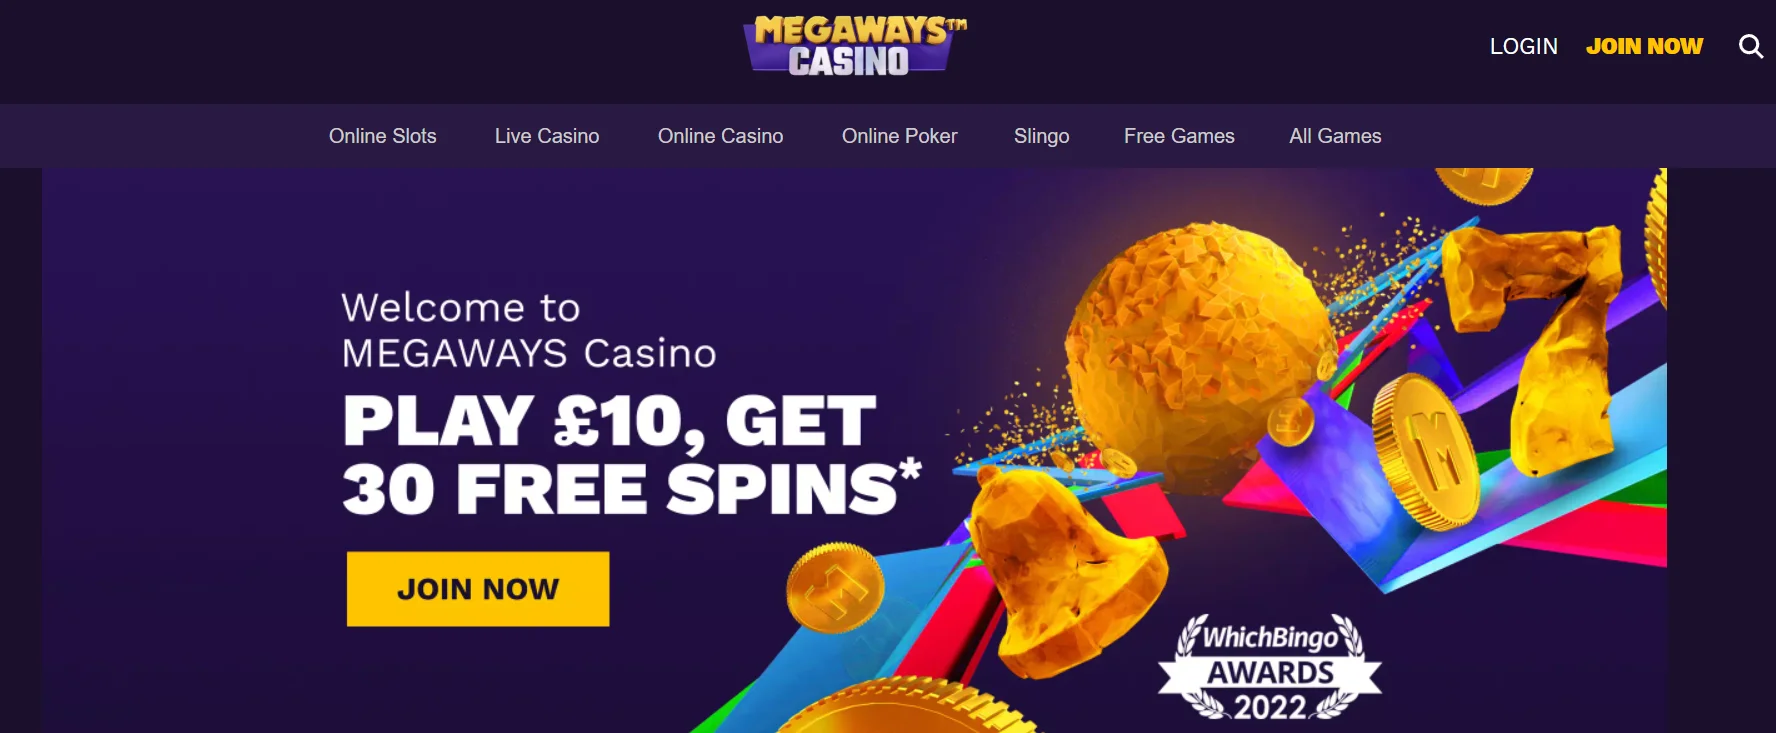 Megaways casino